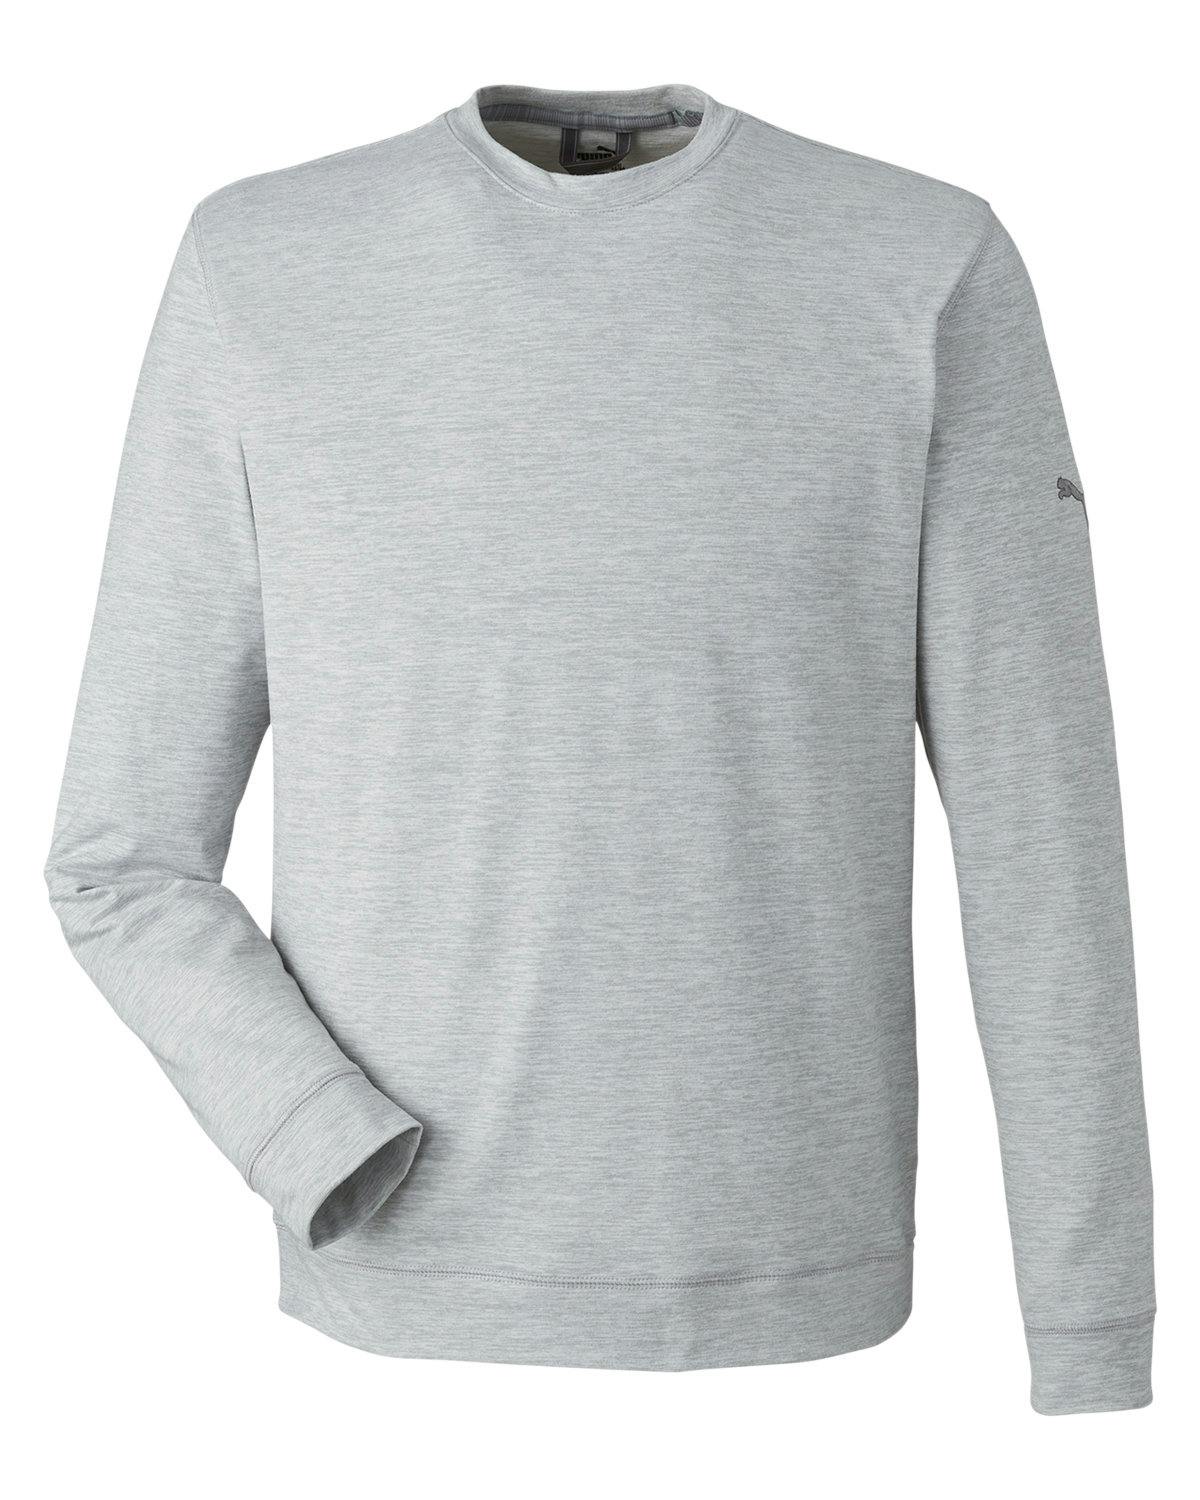 Image for Men's Cloudspun Crewneck Sweatshirt